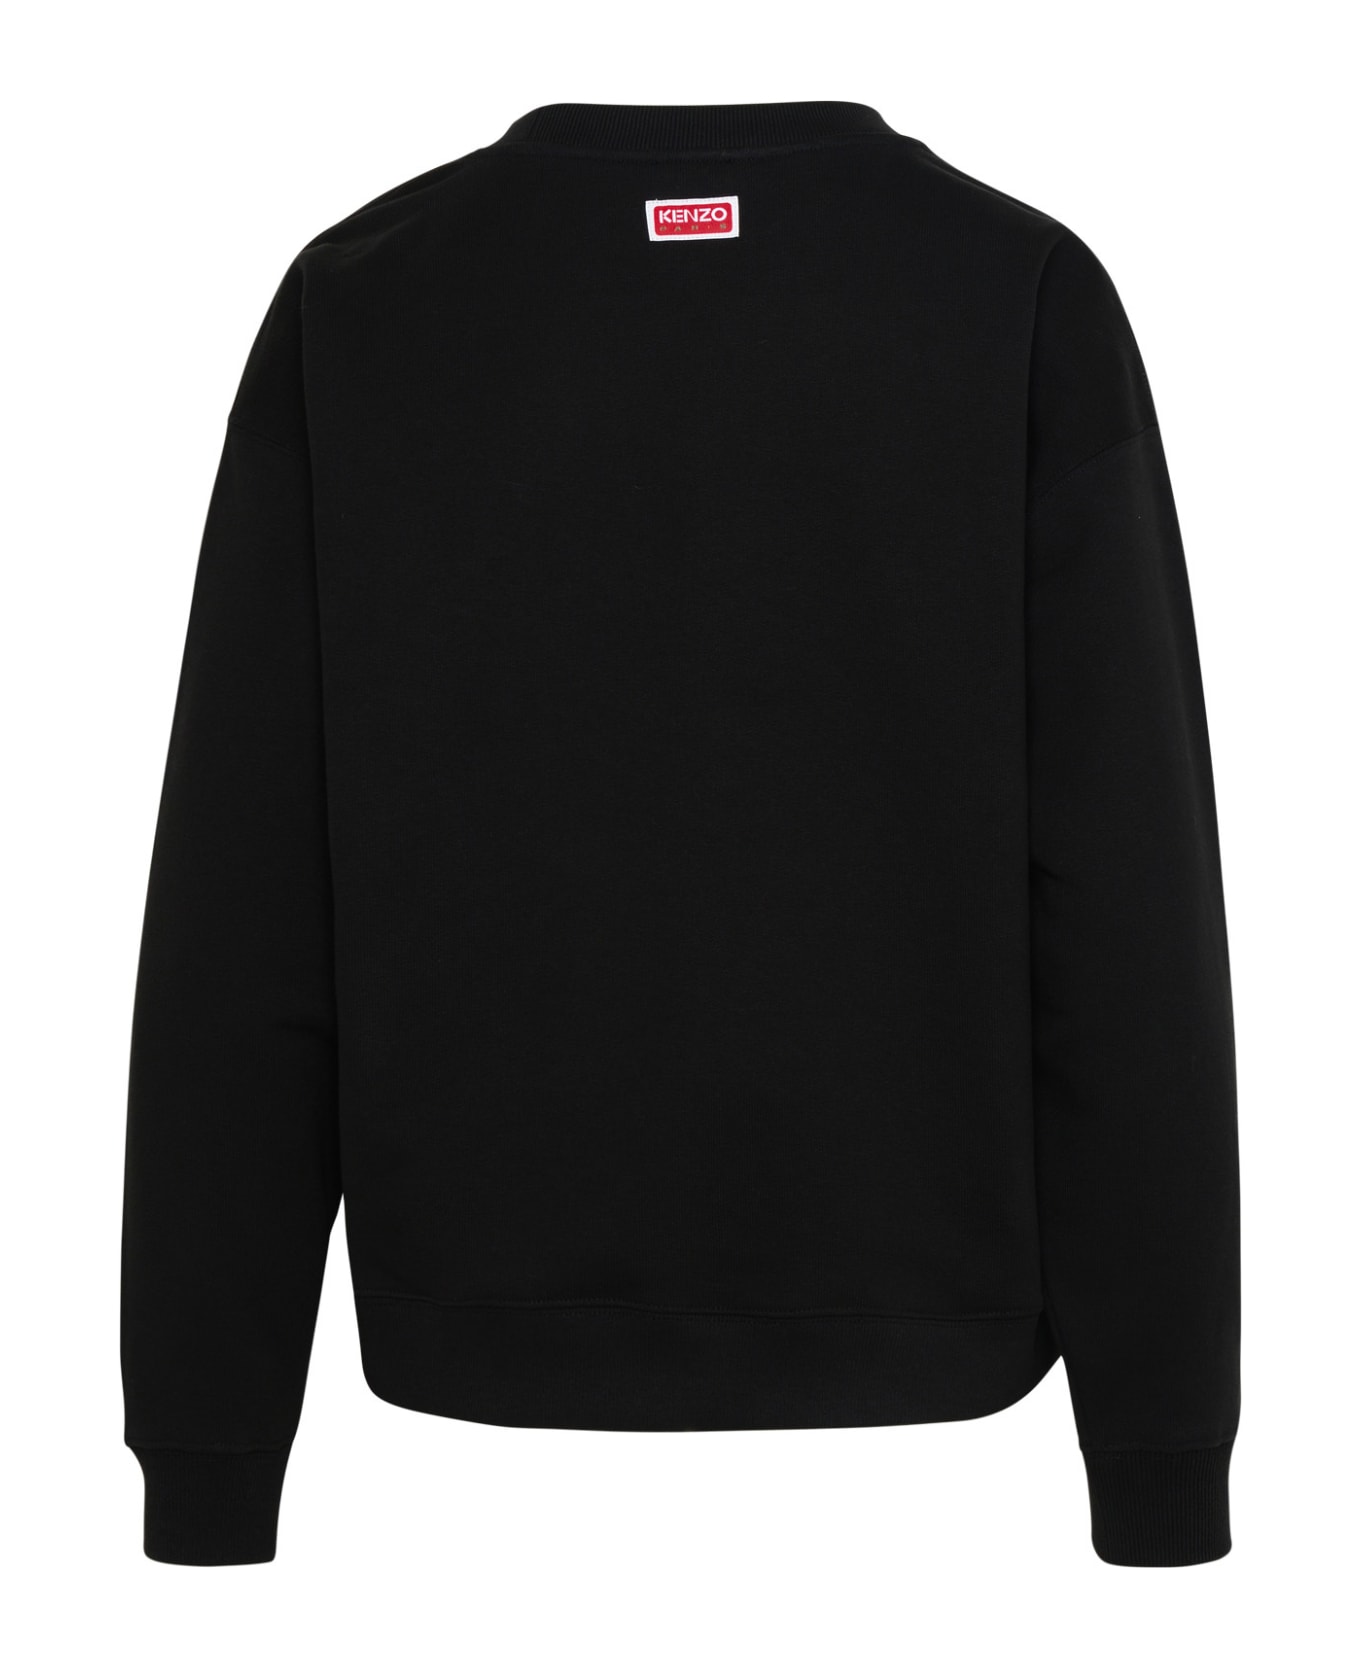 Kenzo Black Cotton Blend Sweatshirt - Black